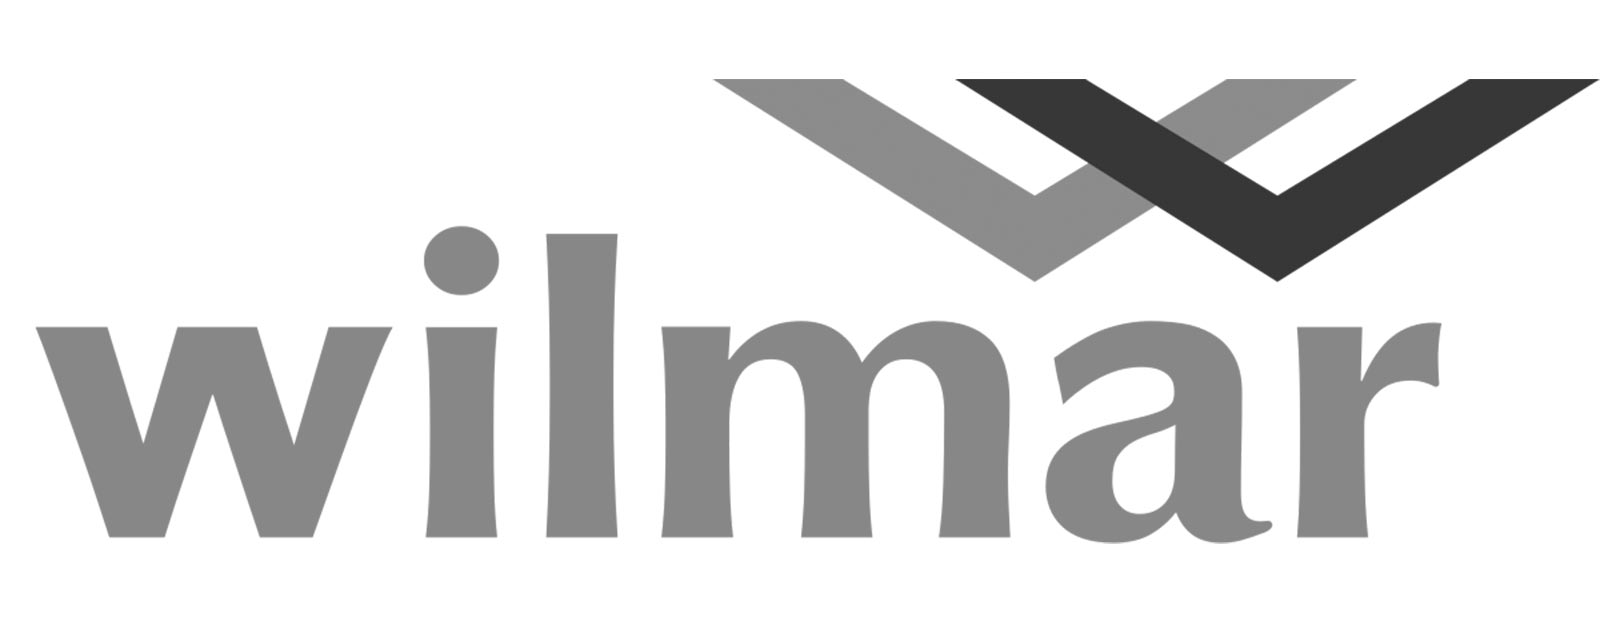 Wilmar International Limited logo